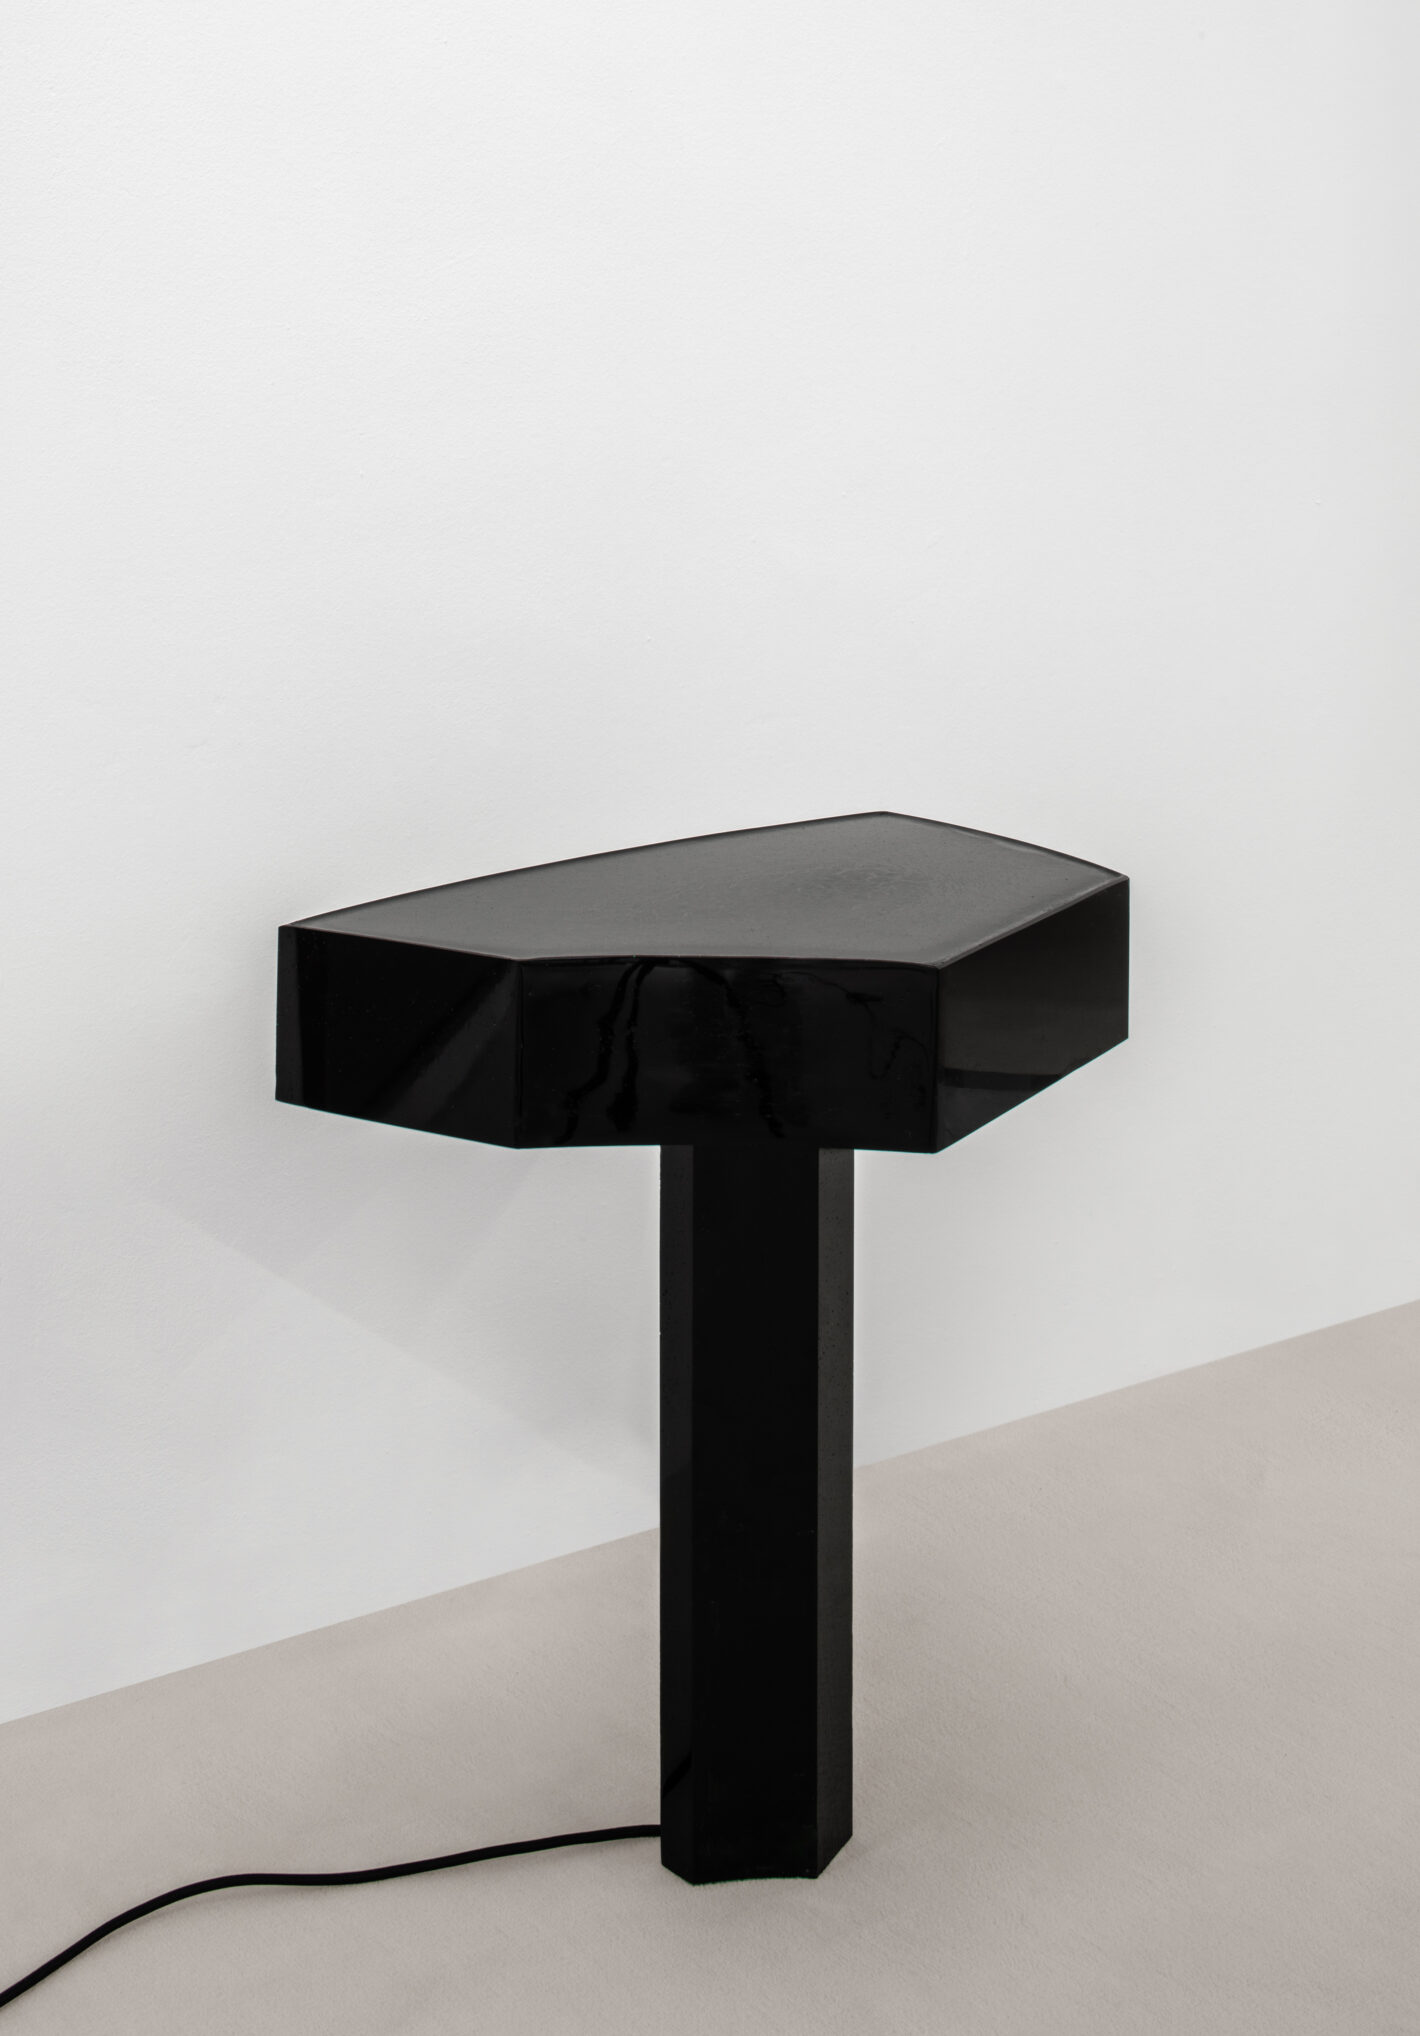 Studio Anne Holtrop Table Lamp pic by Jeroen Verrecht